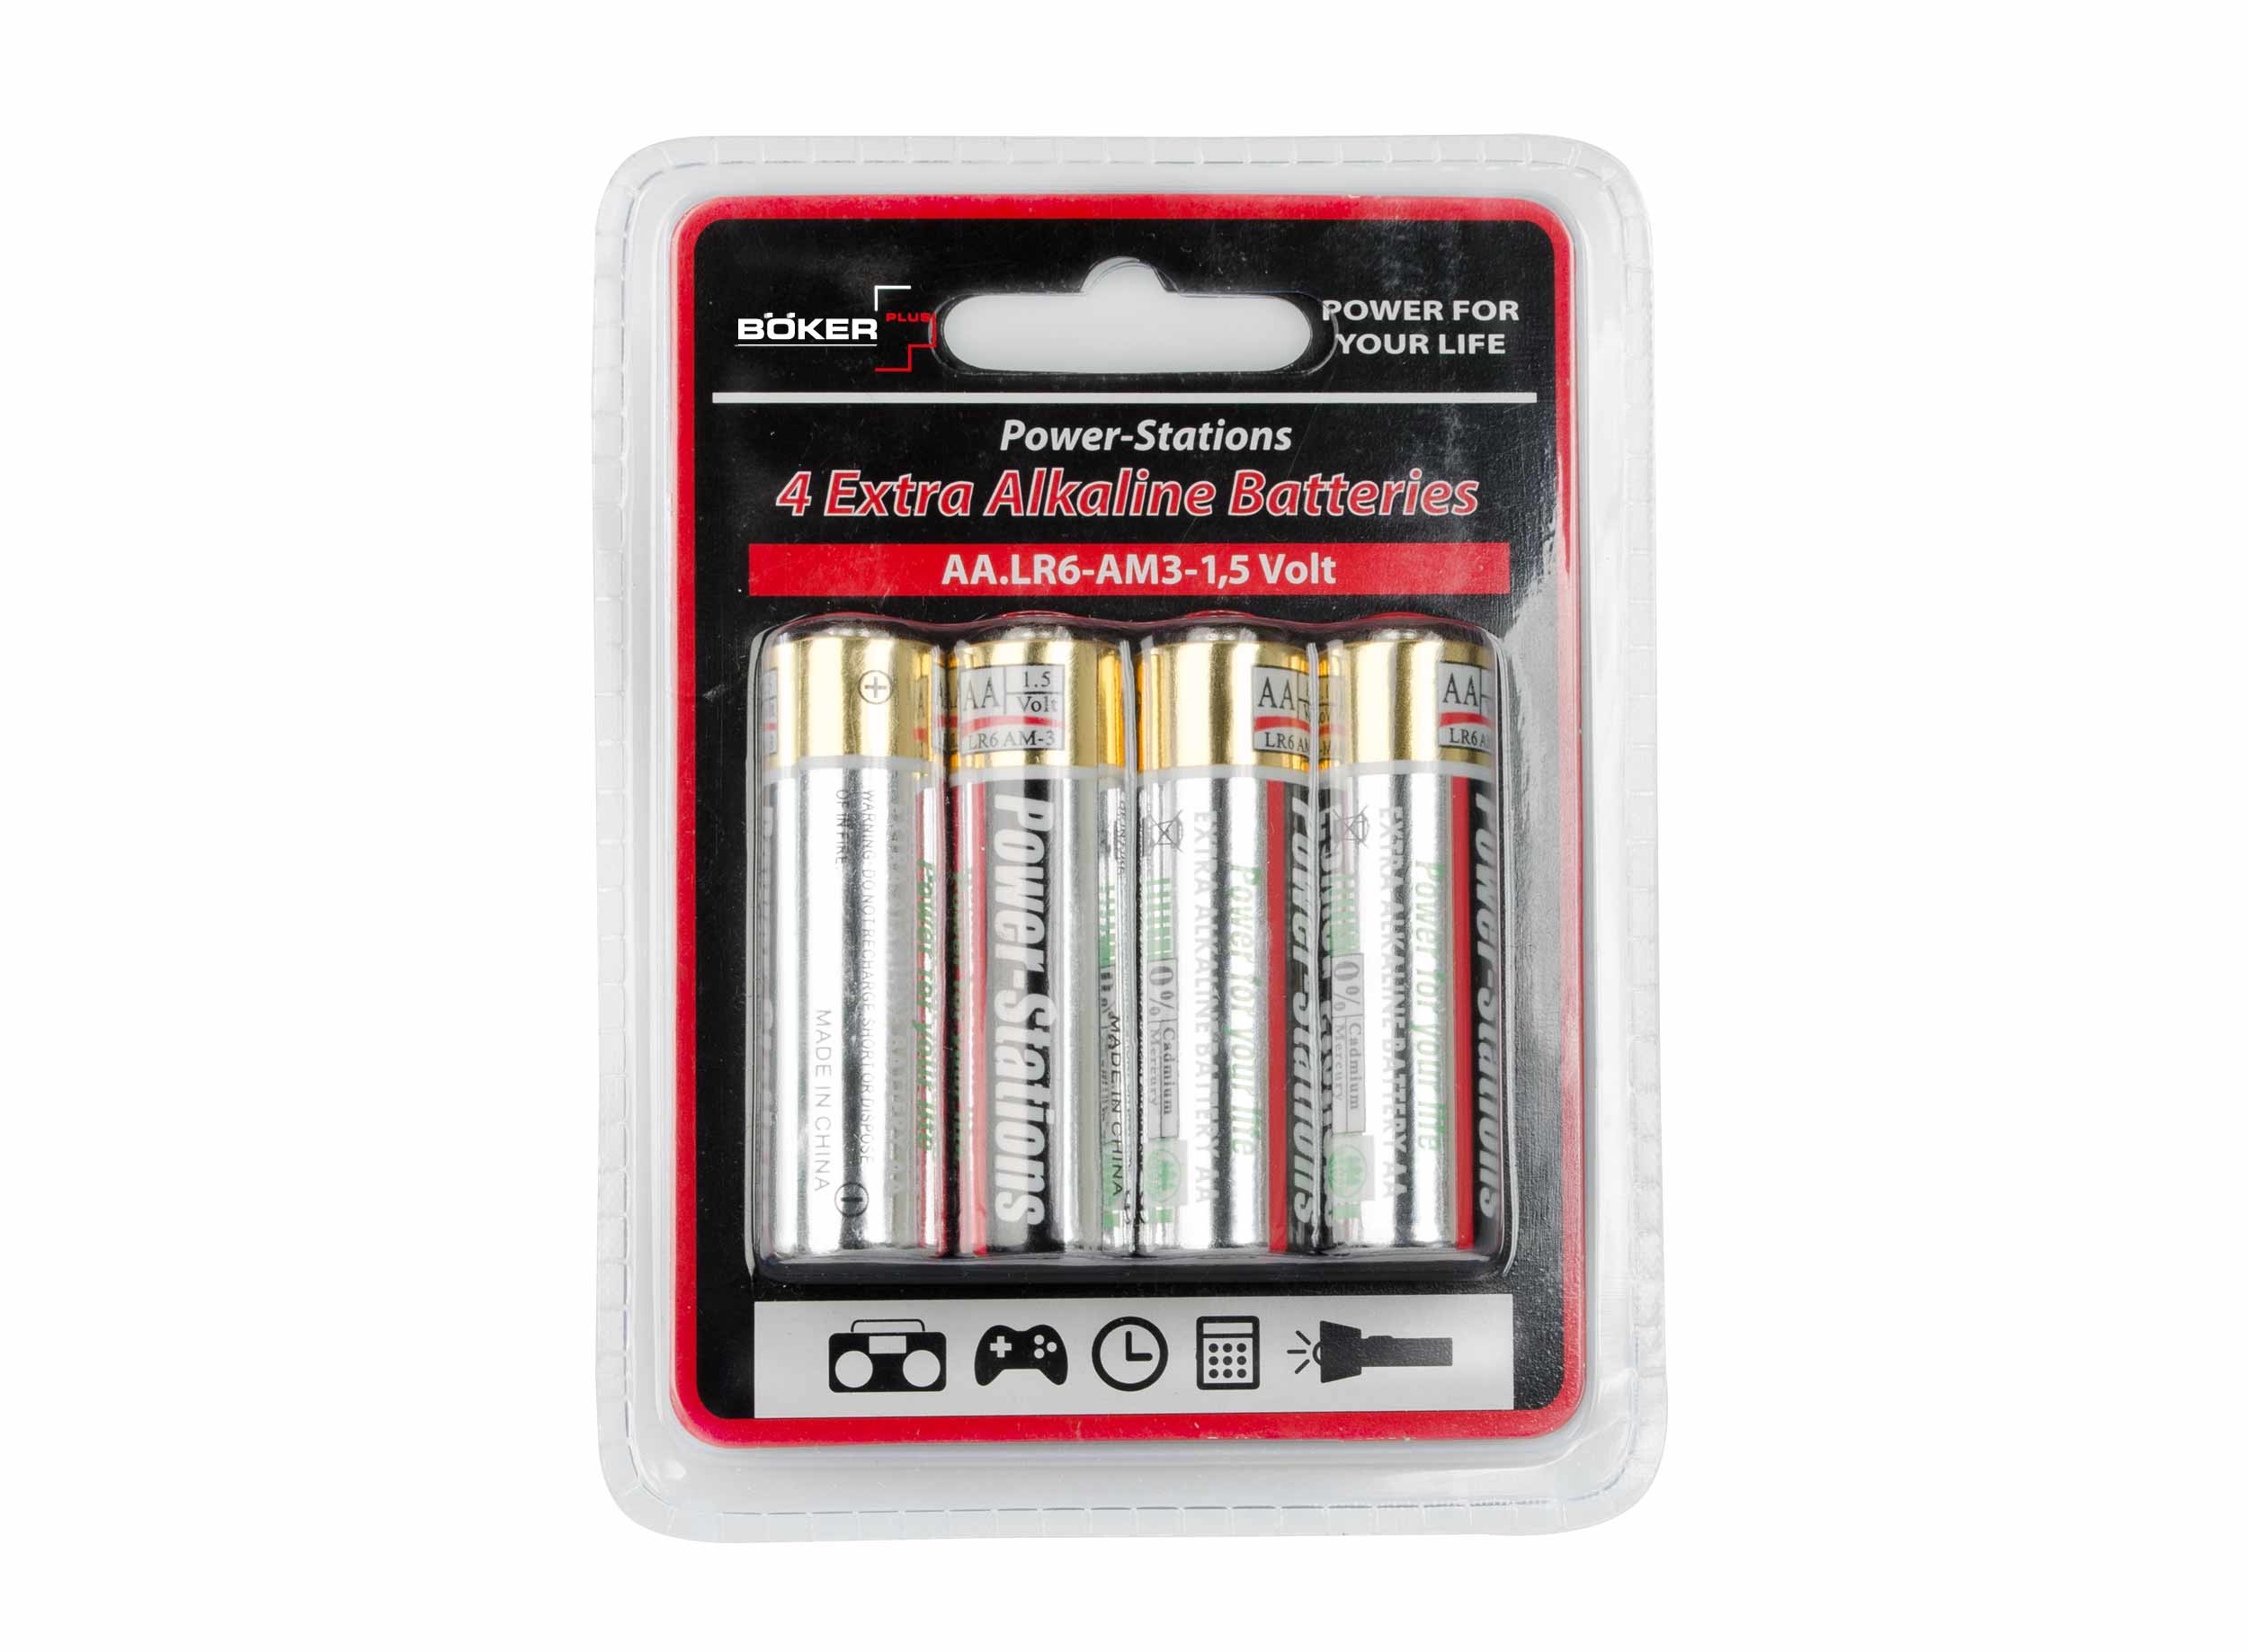 Batterie-Set 4 x AA